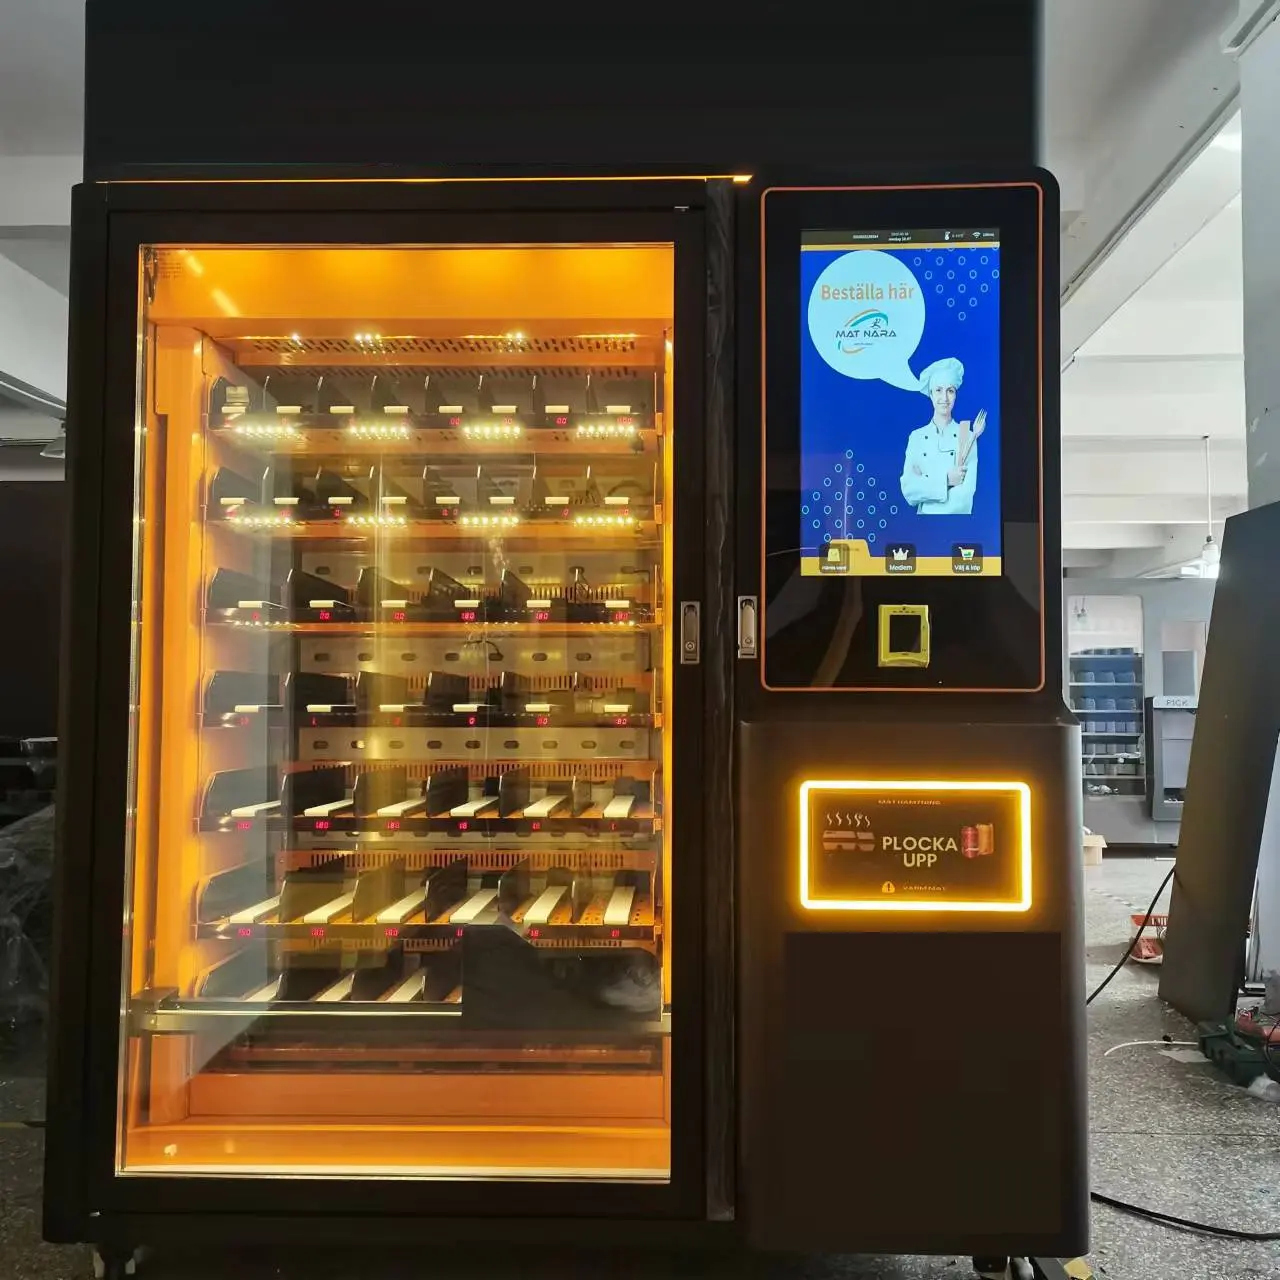 Máquina Expendedora de fiambrera con microondas incorporado, máquina expendedora con pantalla táctil